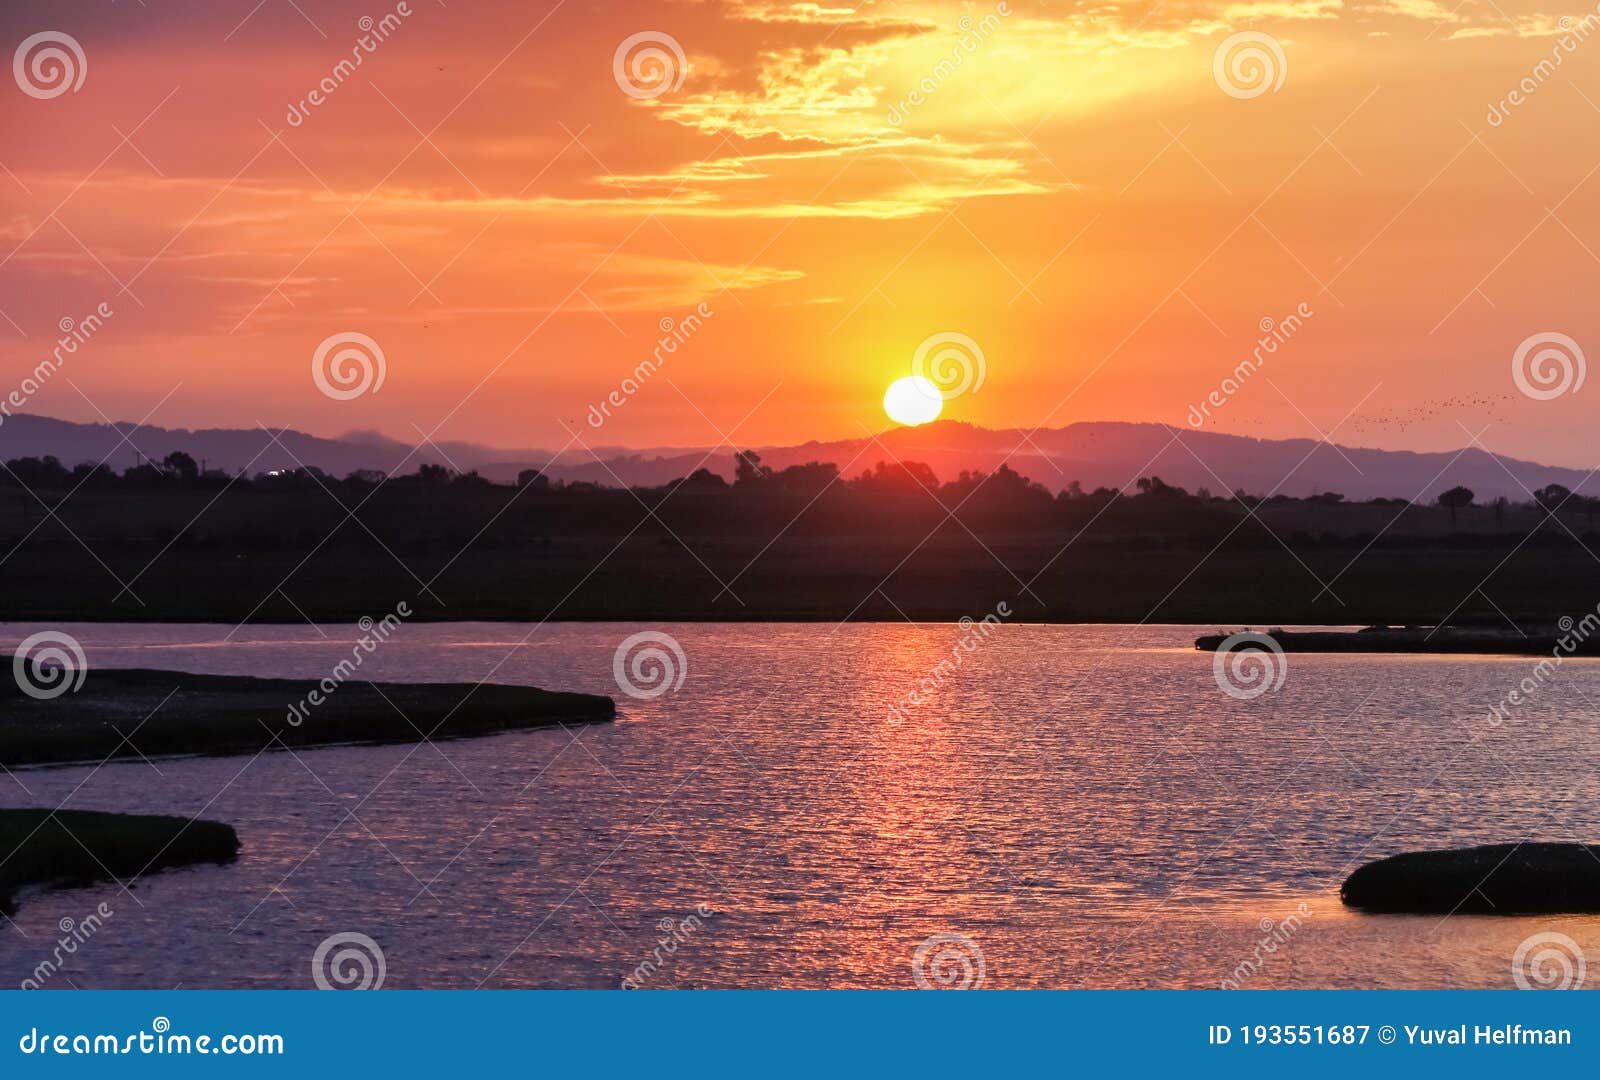 sun setting over baylands nature preserve